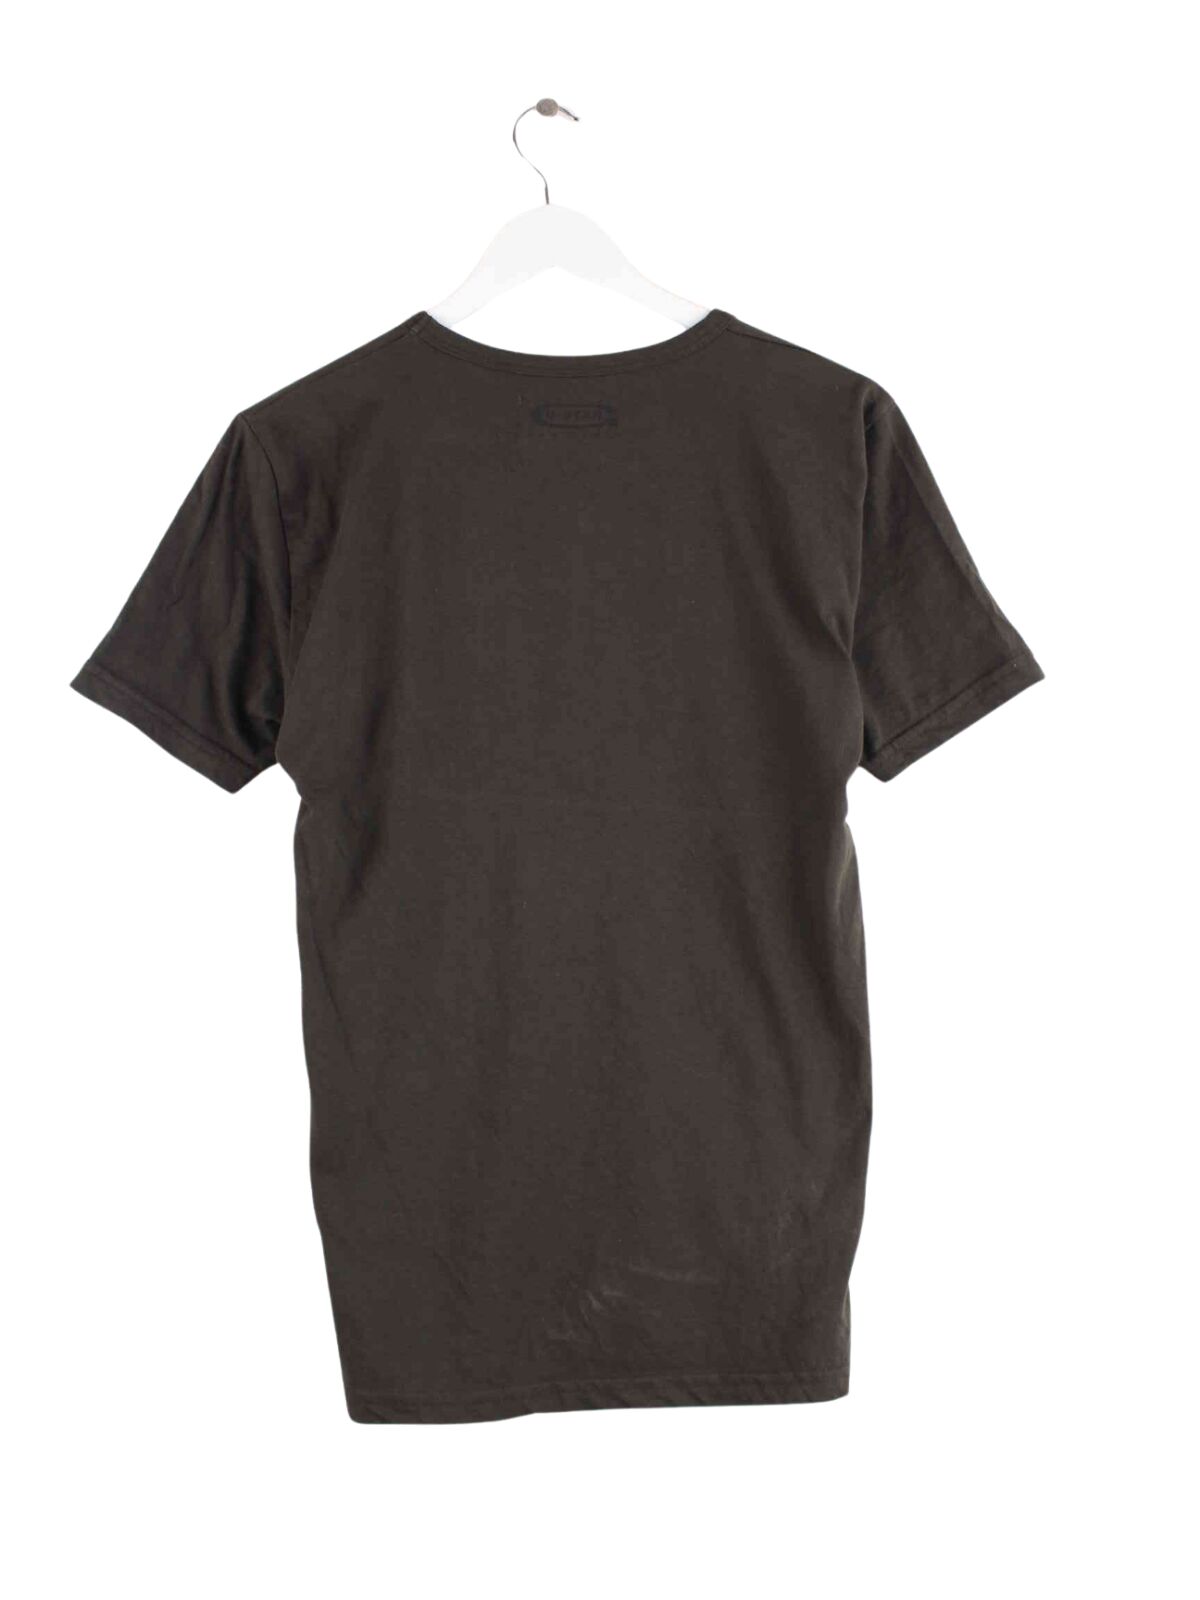 G-Star Raw Print T-Shirt Braun S (back image)